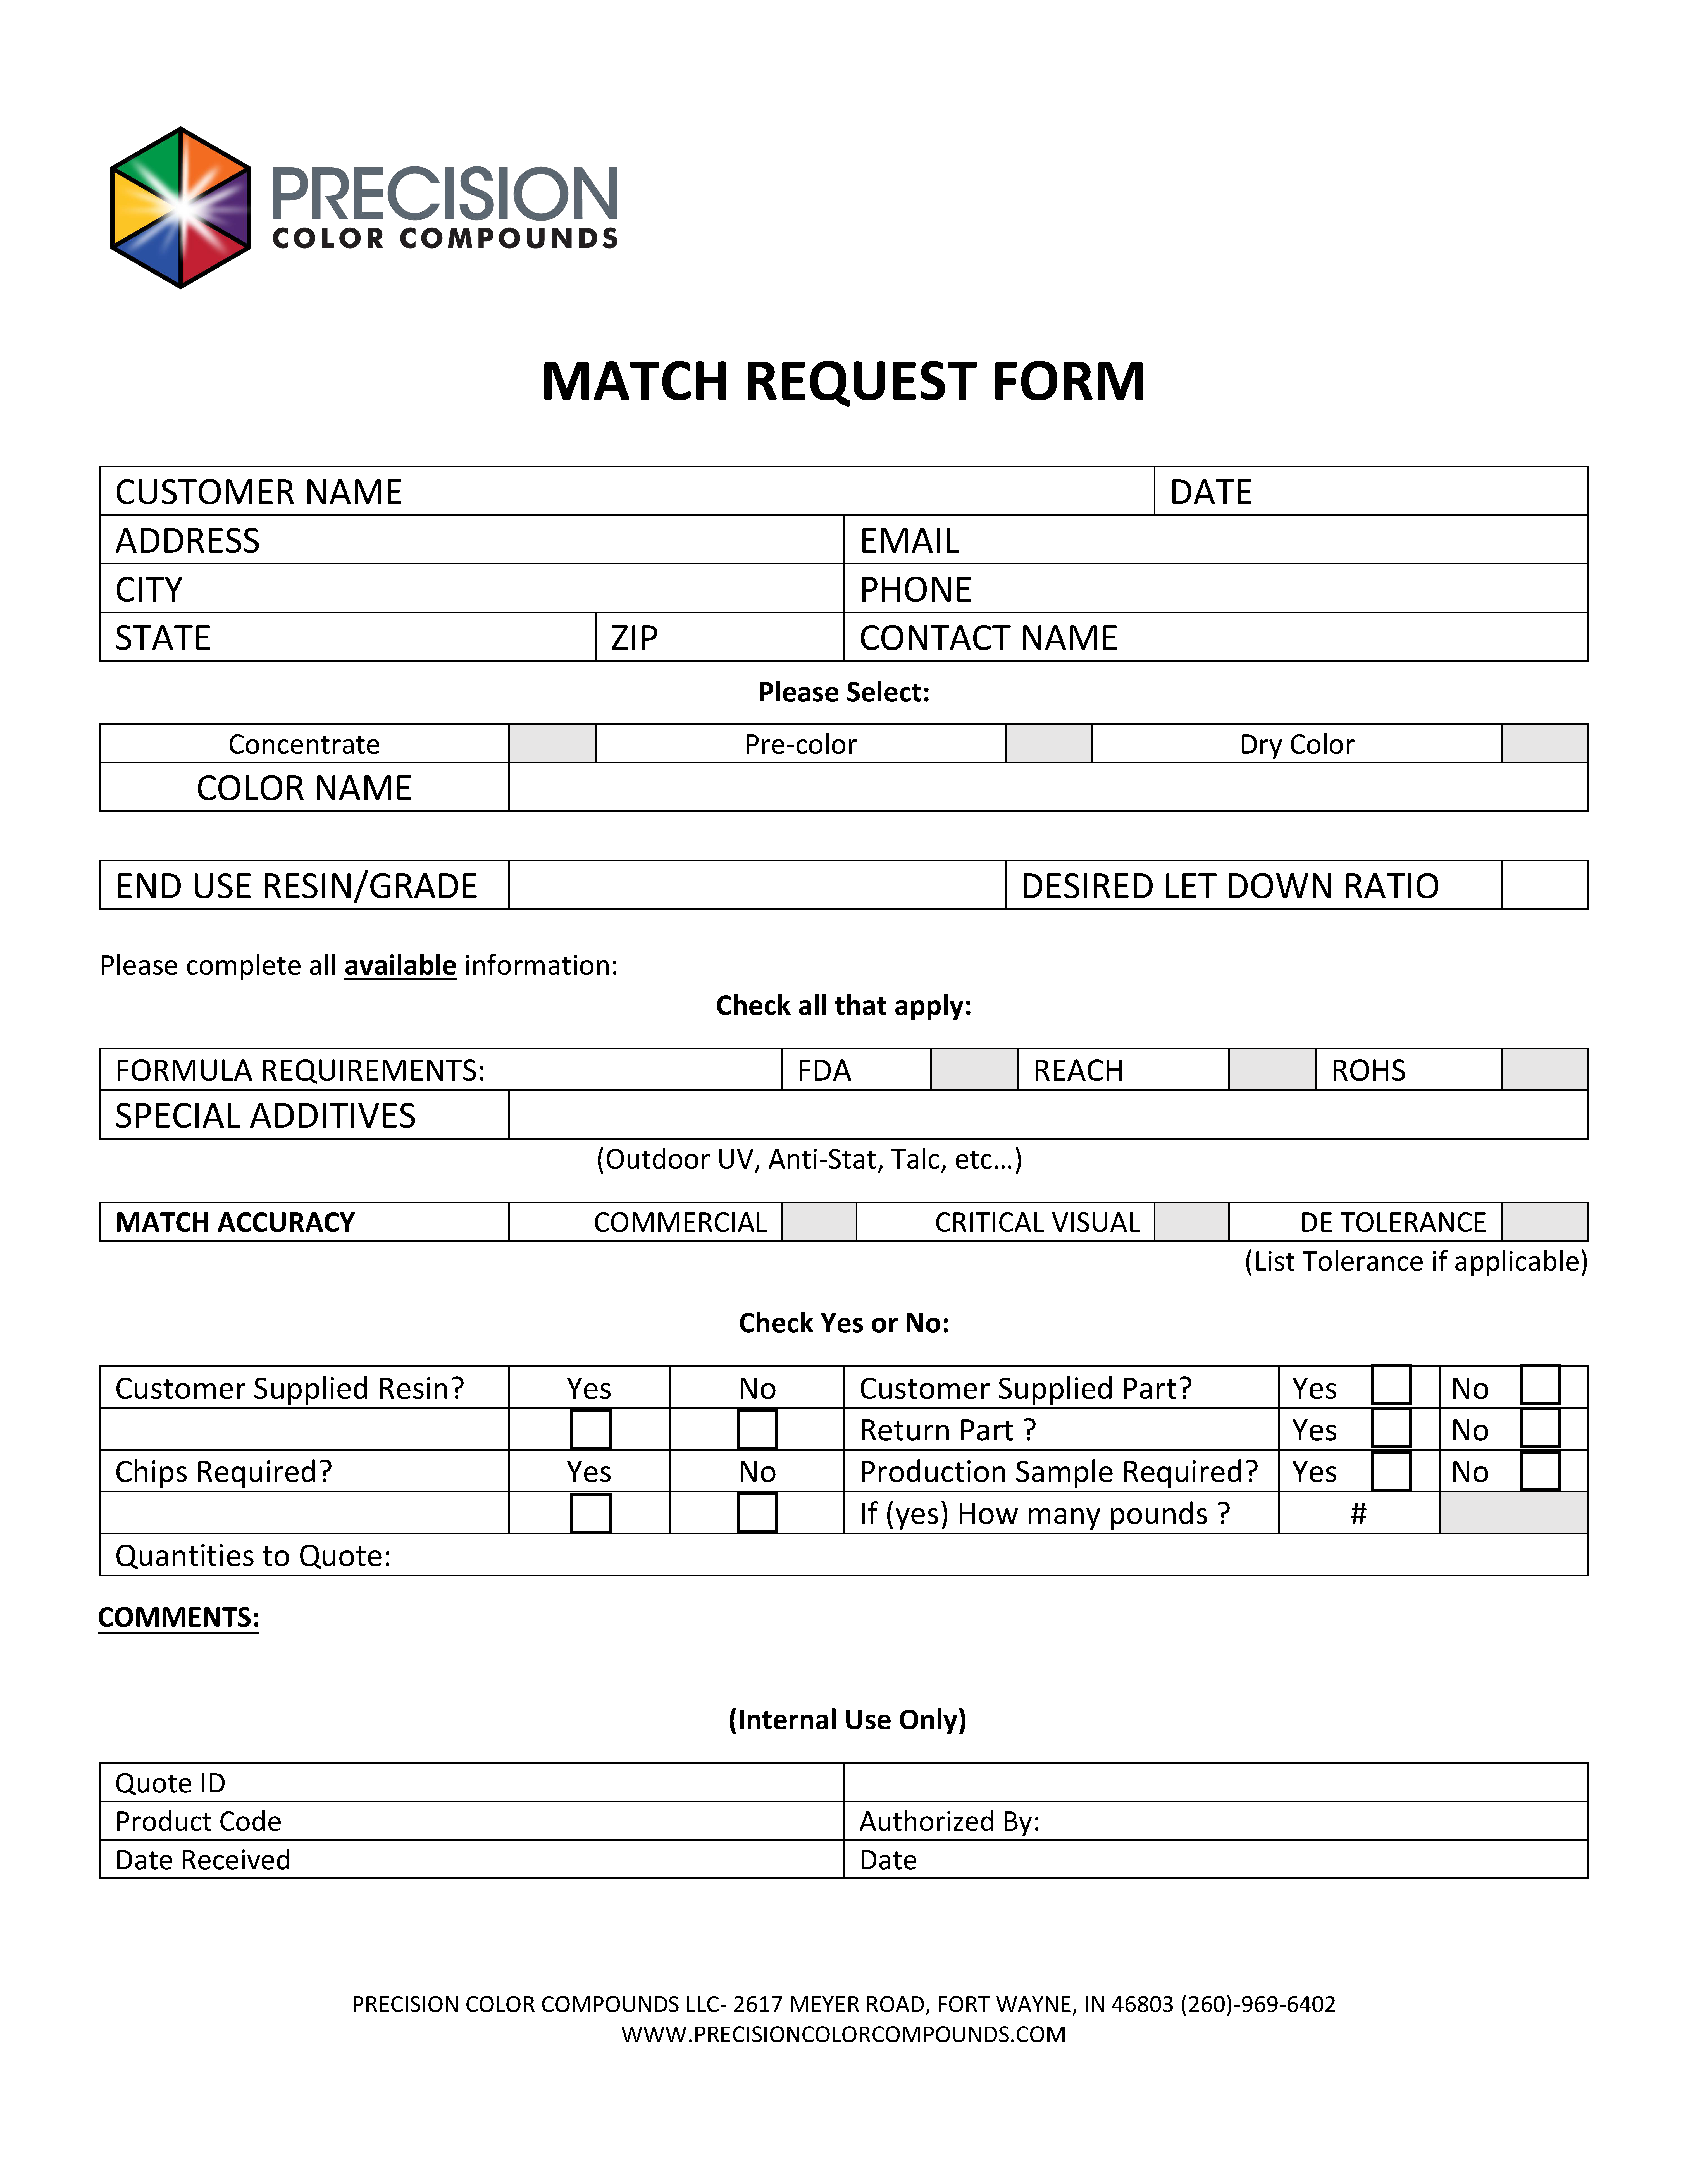 PCC New Match Request Form 2022